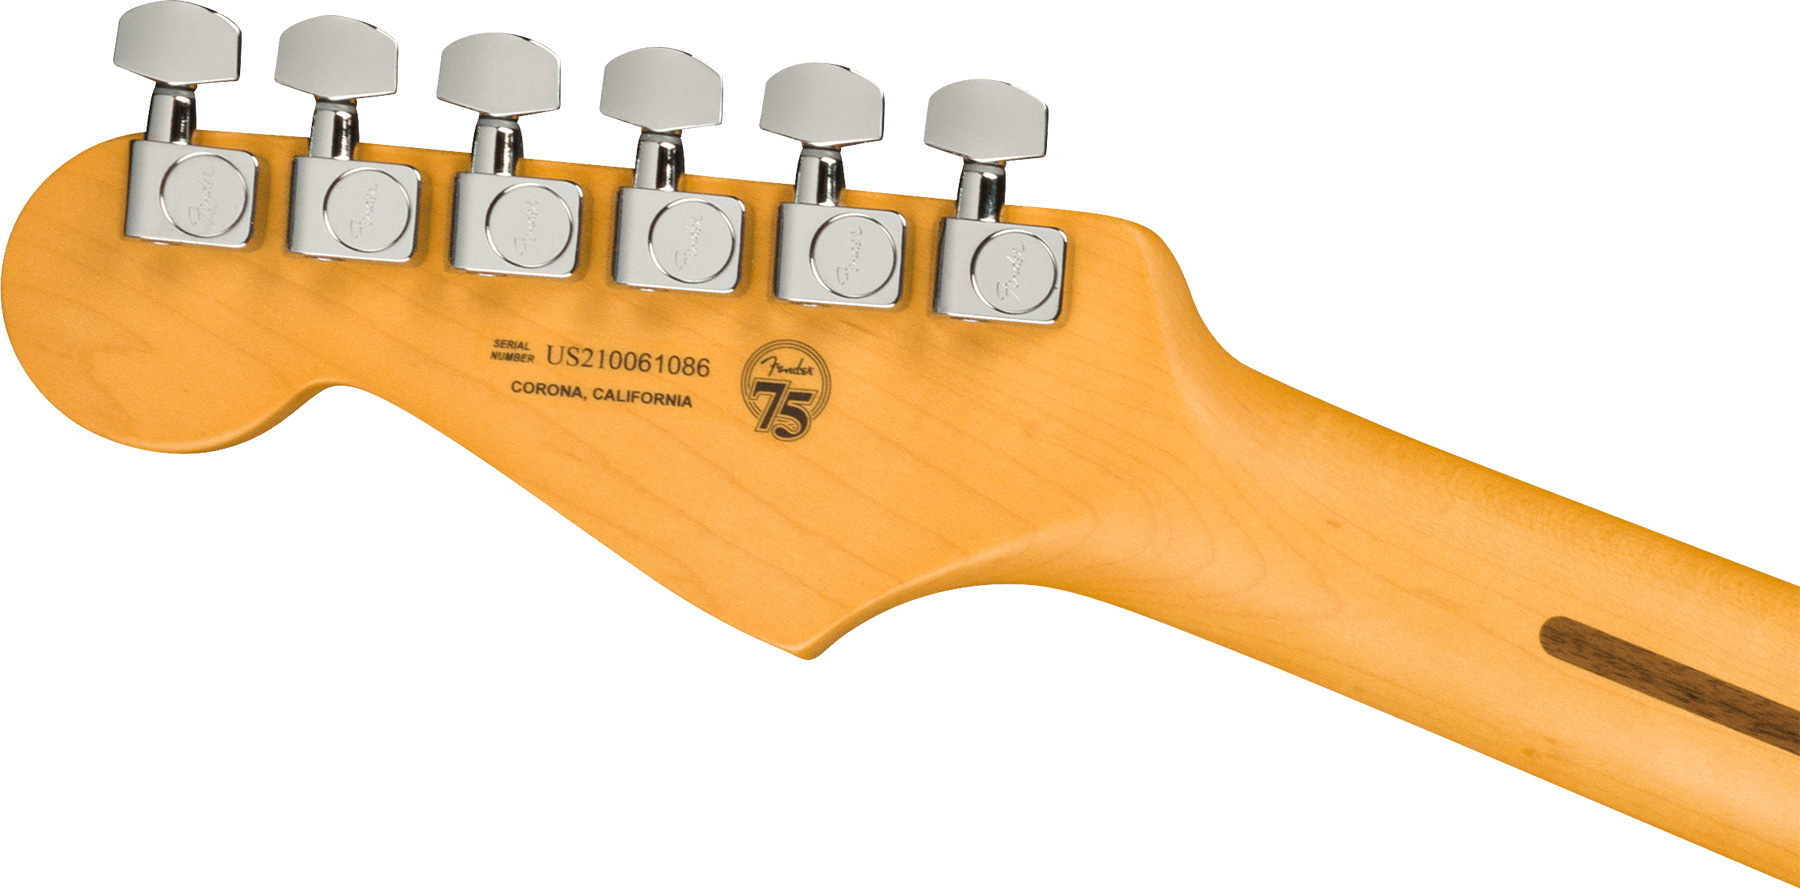 Fender Strat American Pro Ii Ltd Hss Trem Mn - Shell Pink - Str shape electric guitar - Variation 3